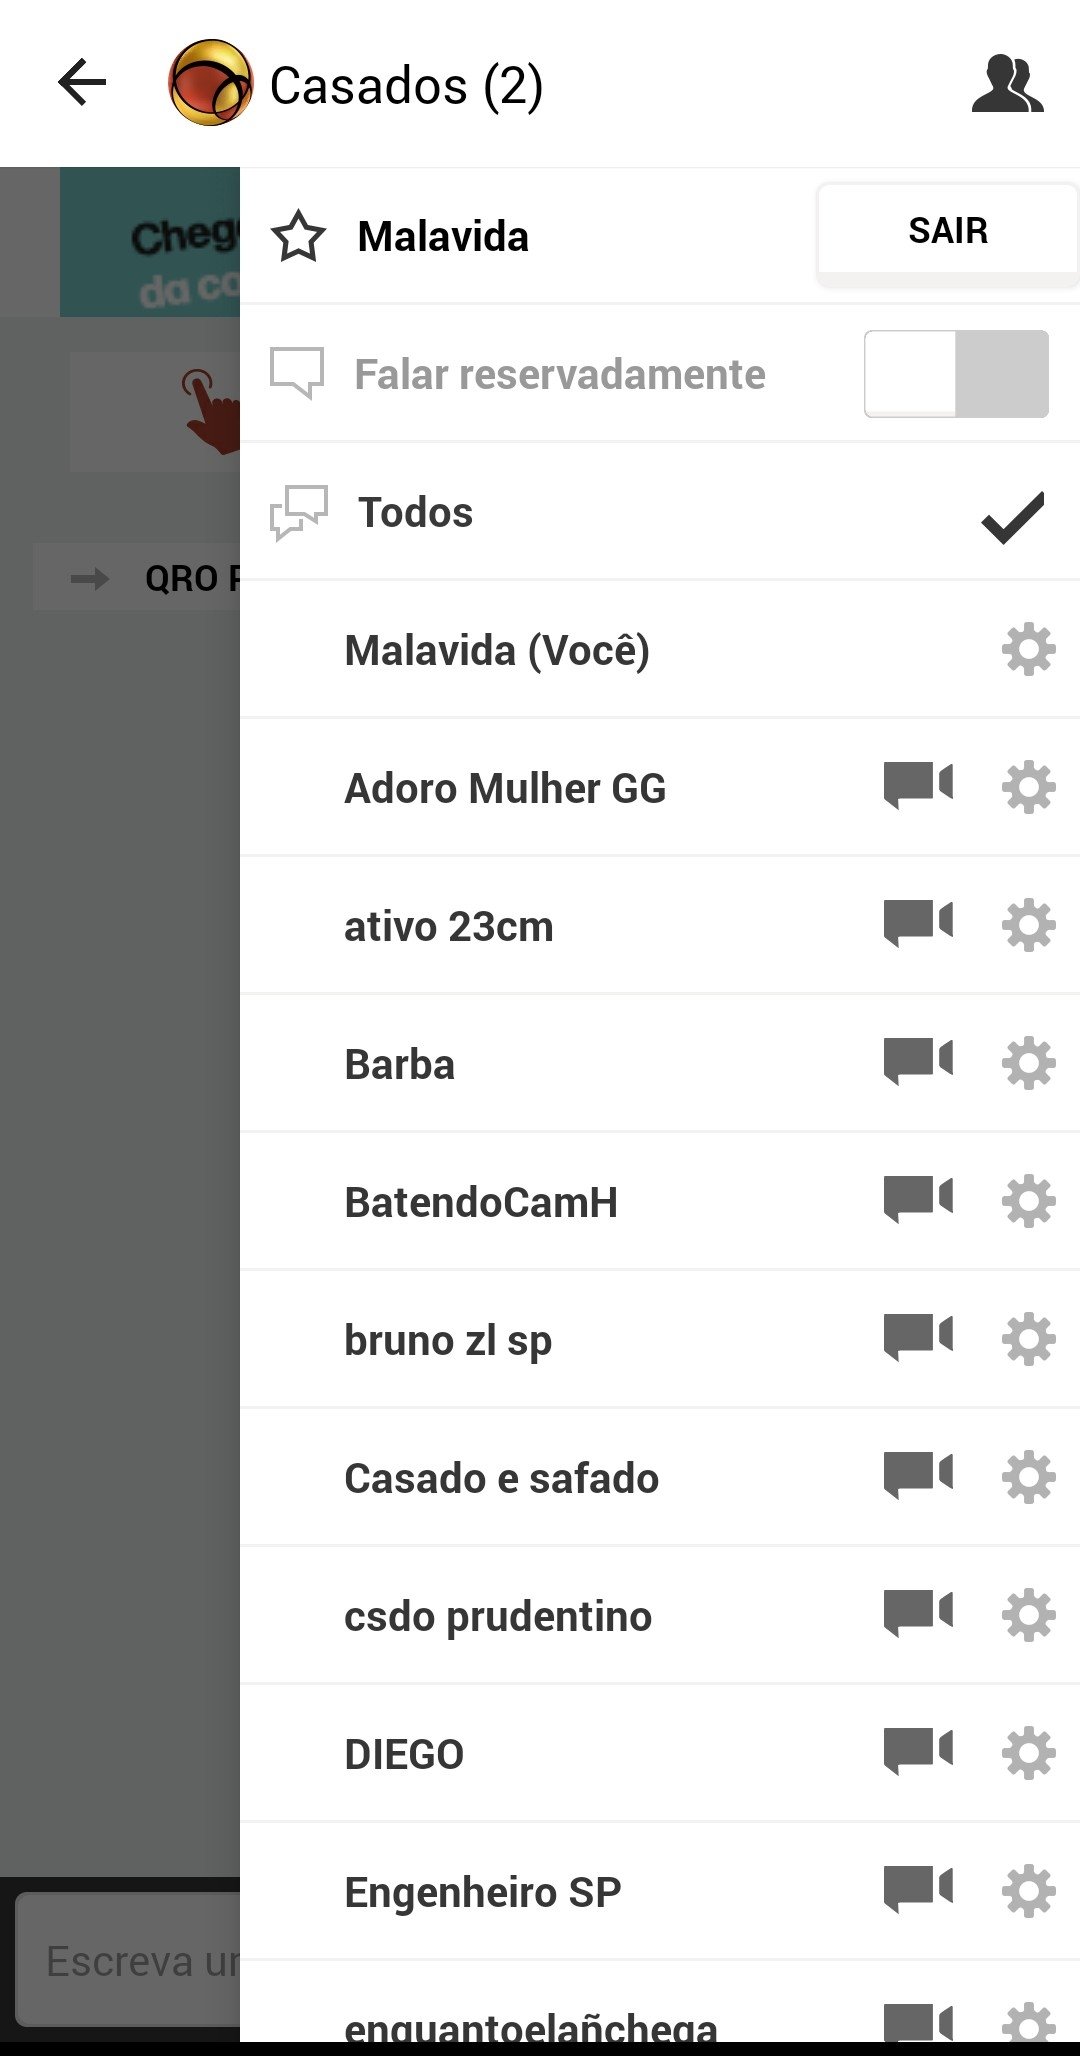 Baixar Bate-Papo UOL 4.9 Android - Download APK Grátis